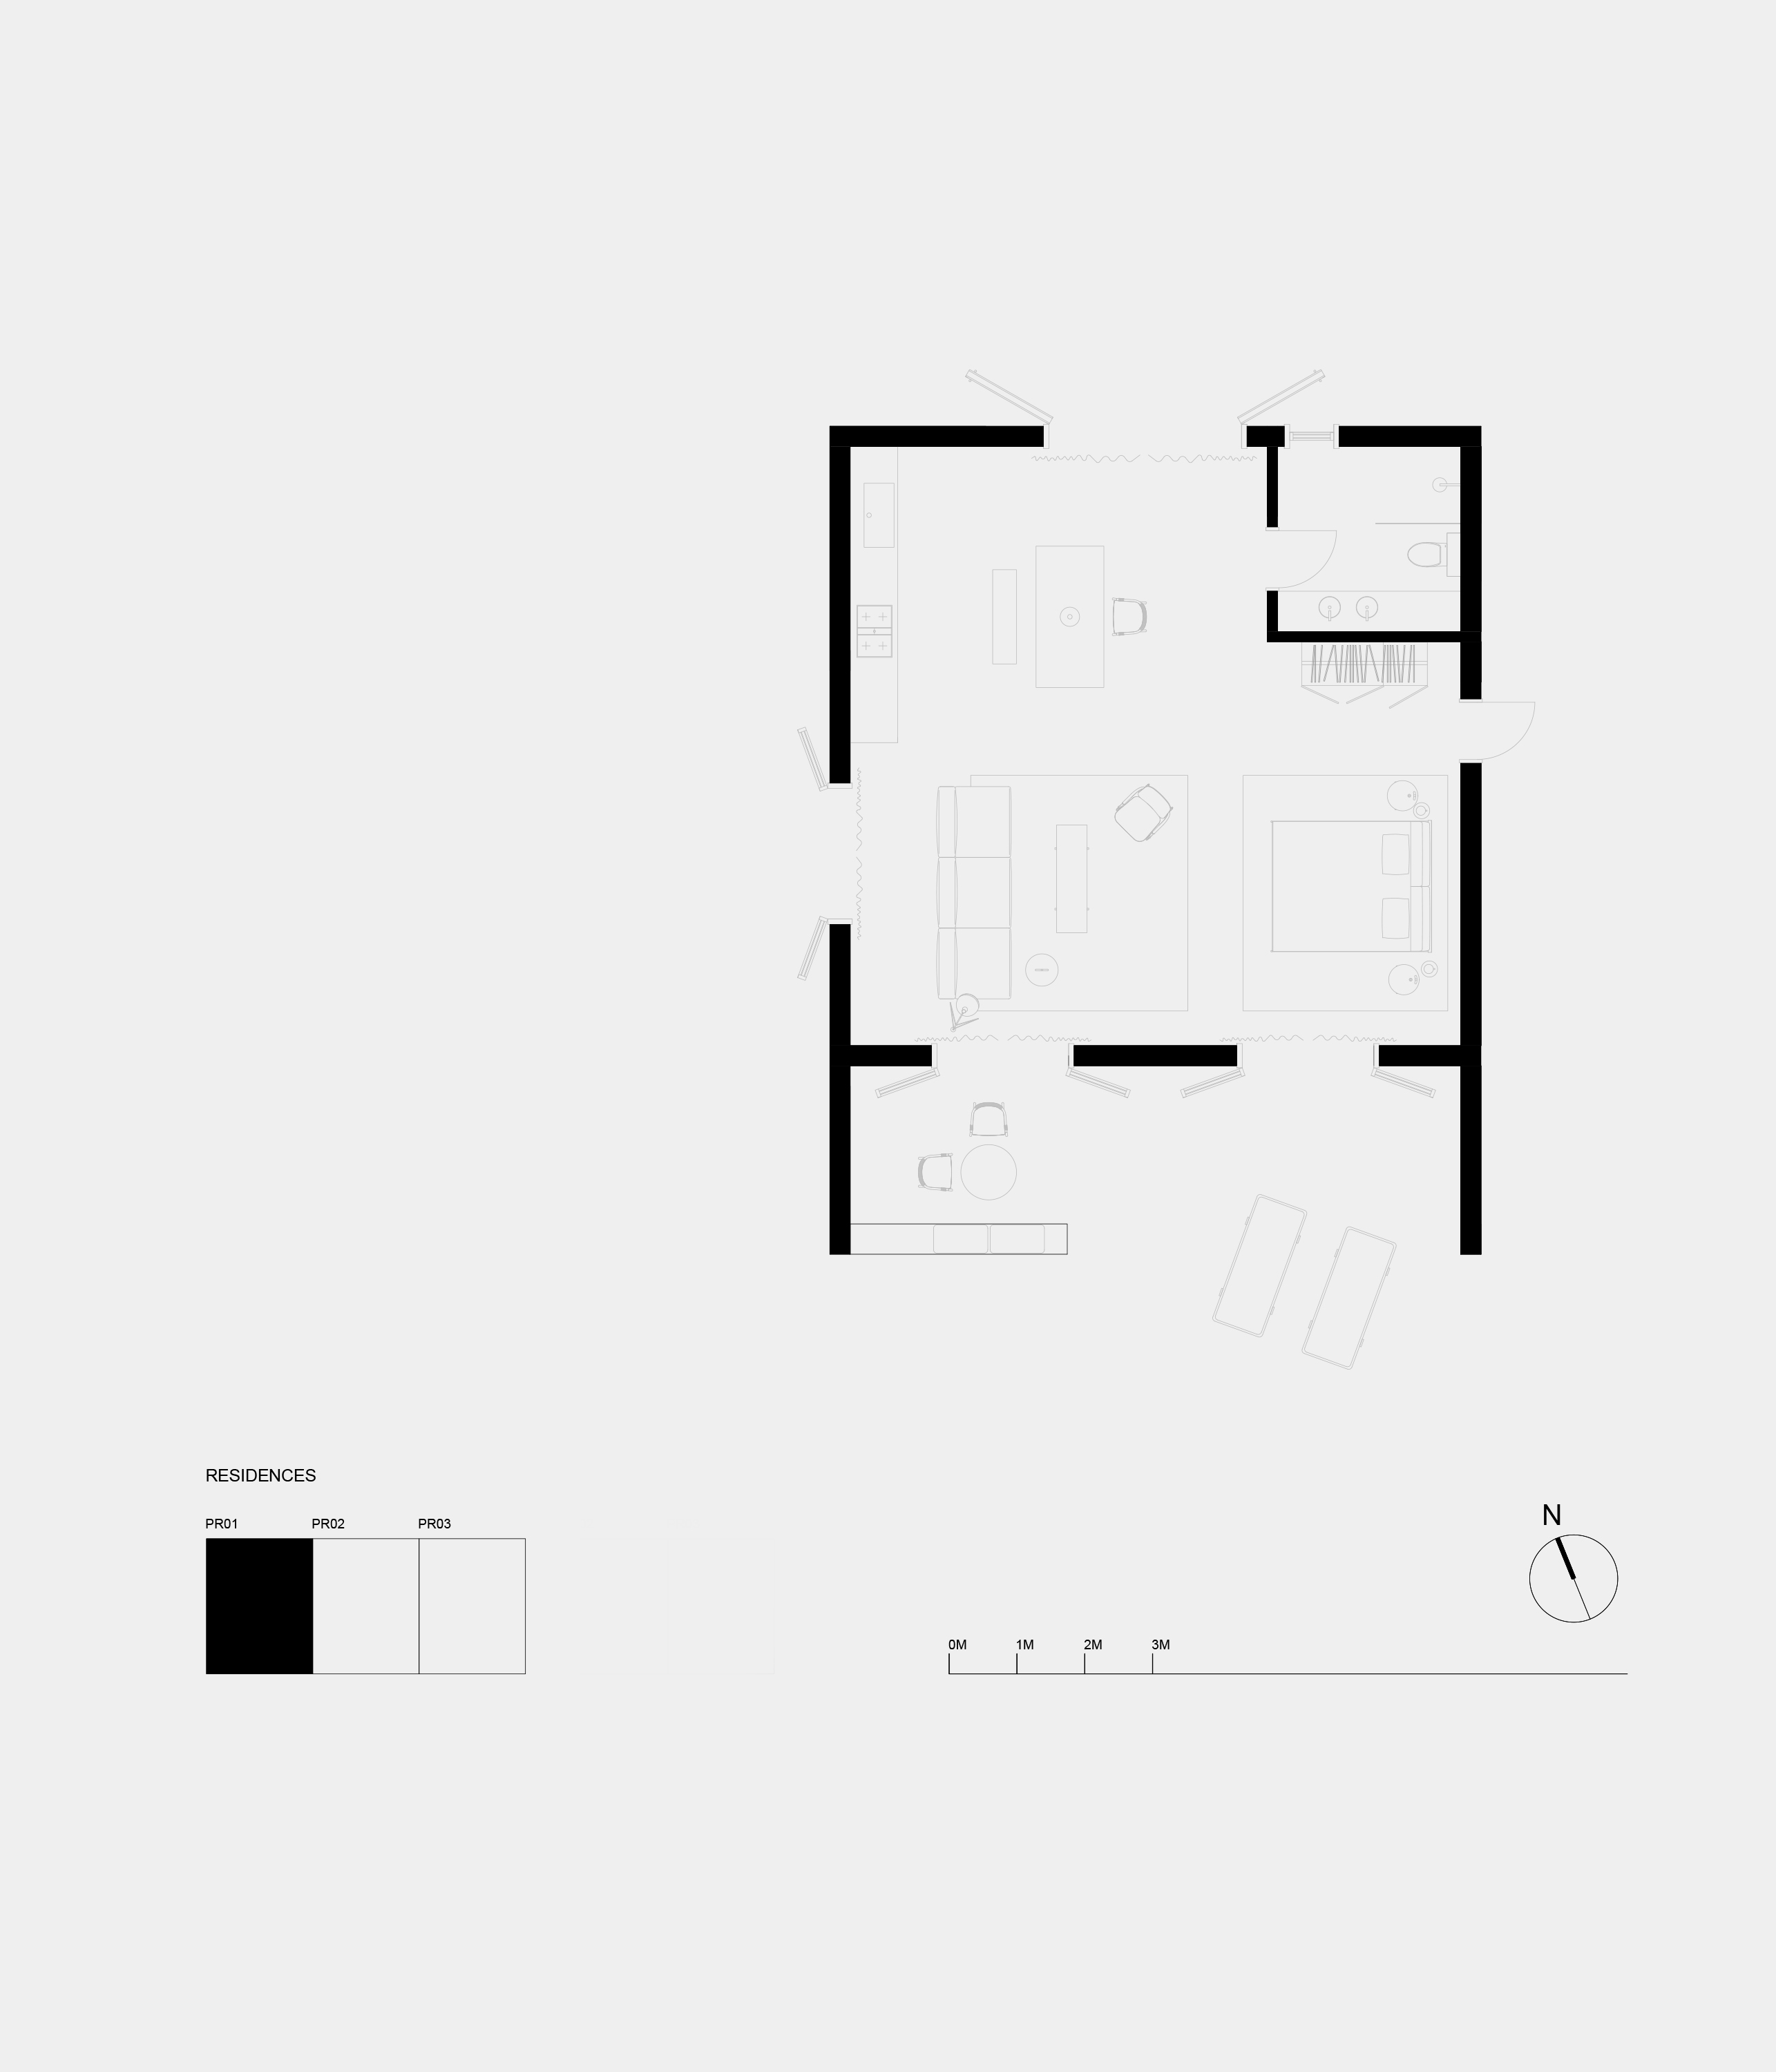 IA2120 - BOUTIQUE HOUSE - Ground Floor Residences PR01 Area, Proposed General Arrangment